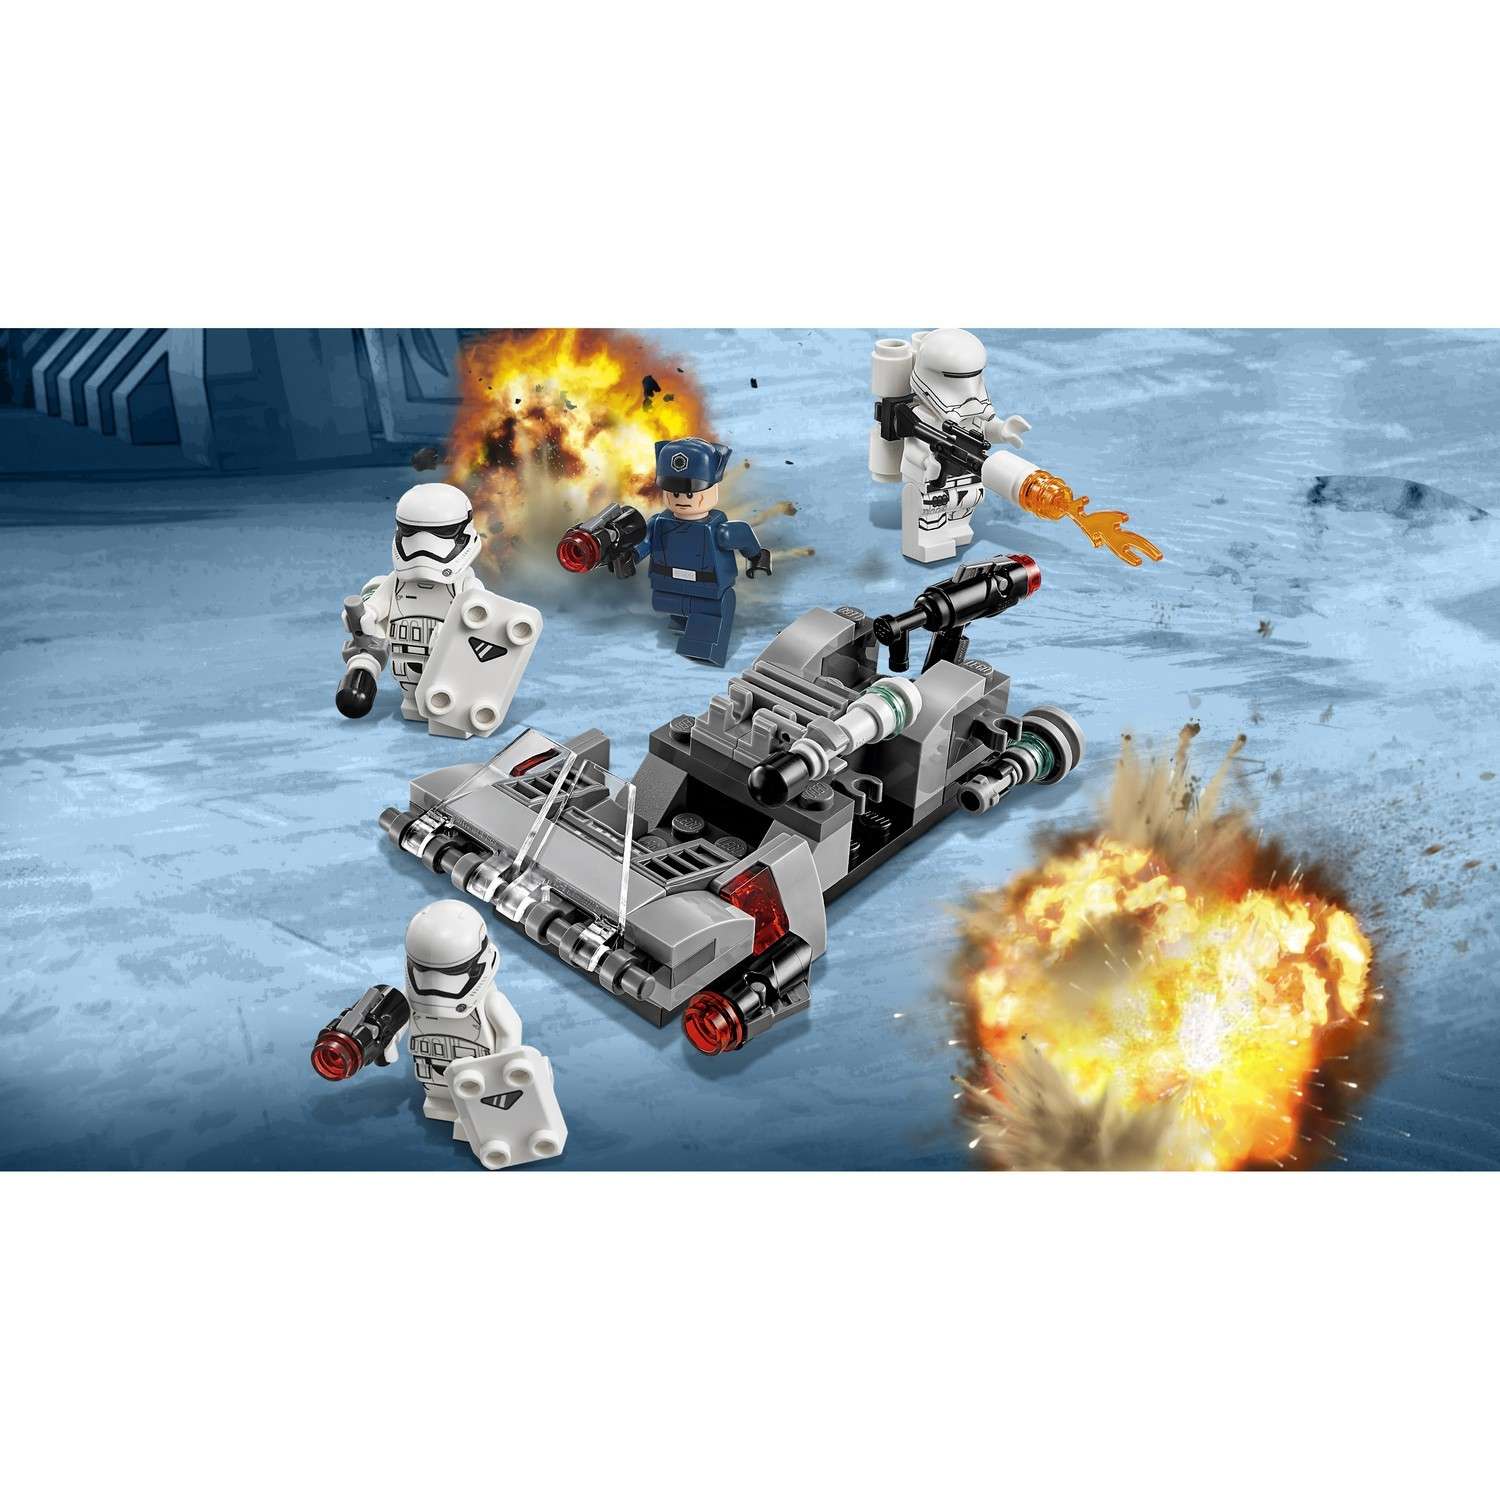 Конструктор LEGO Star Wars TM Спидер Первого ордена (75166) - фото 5